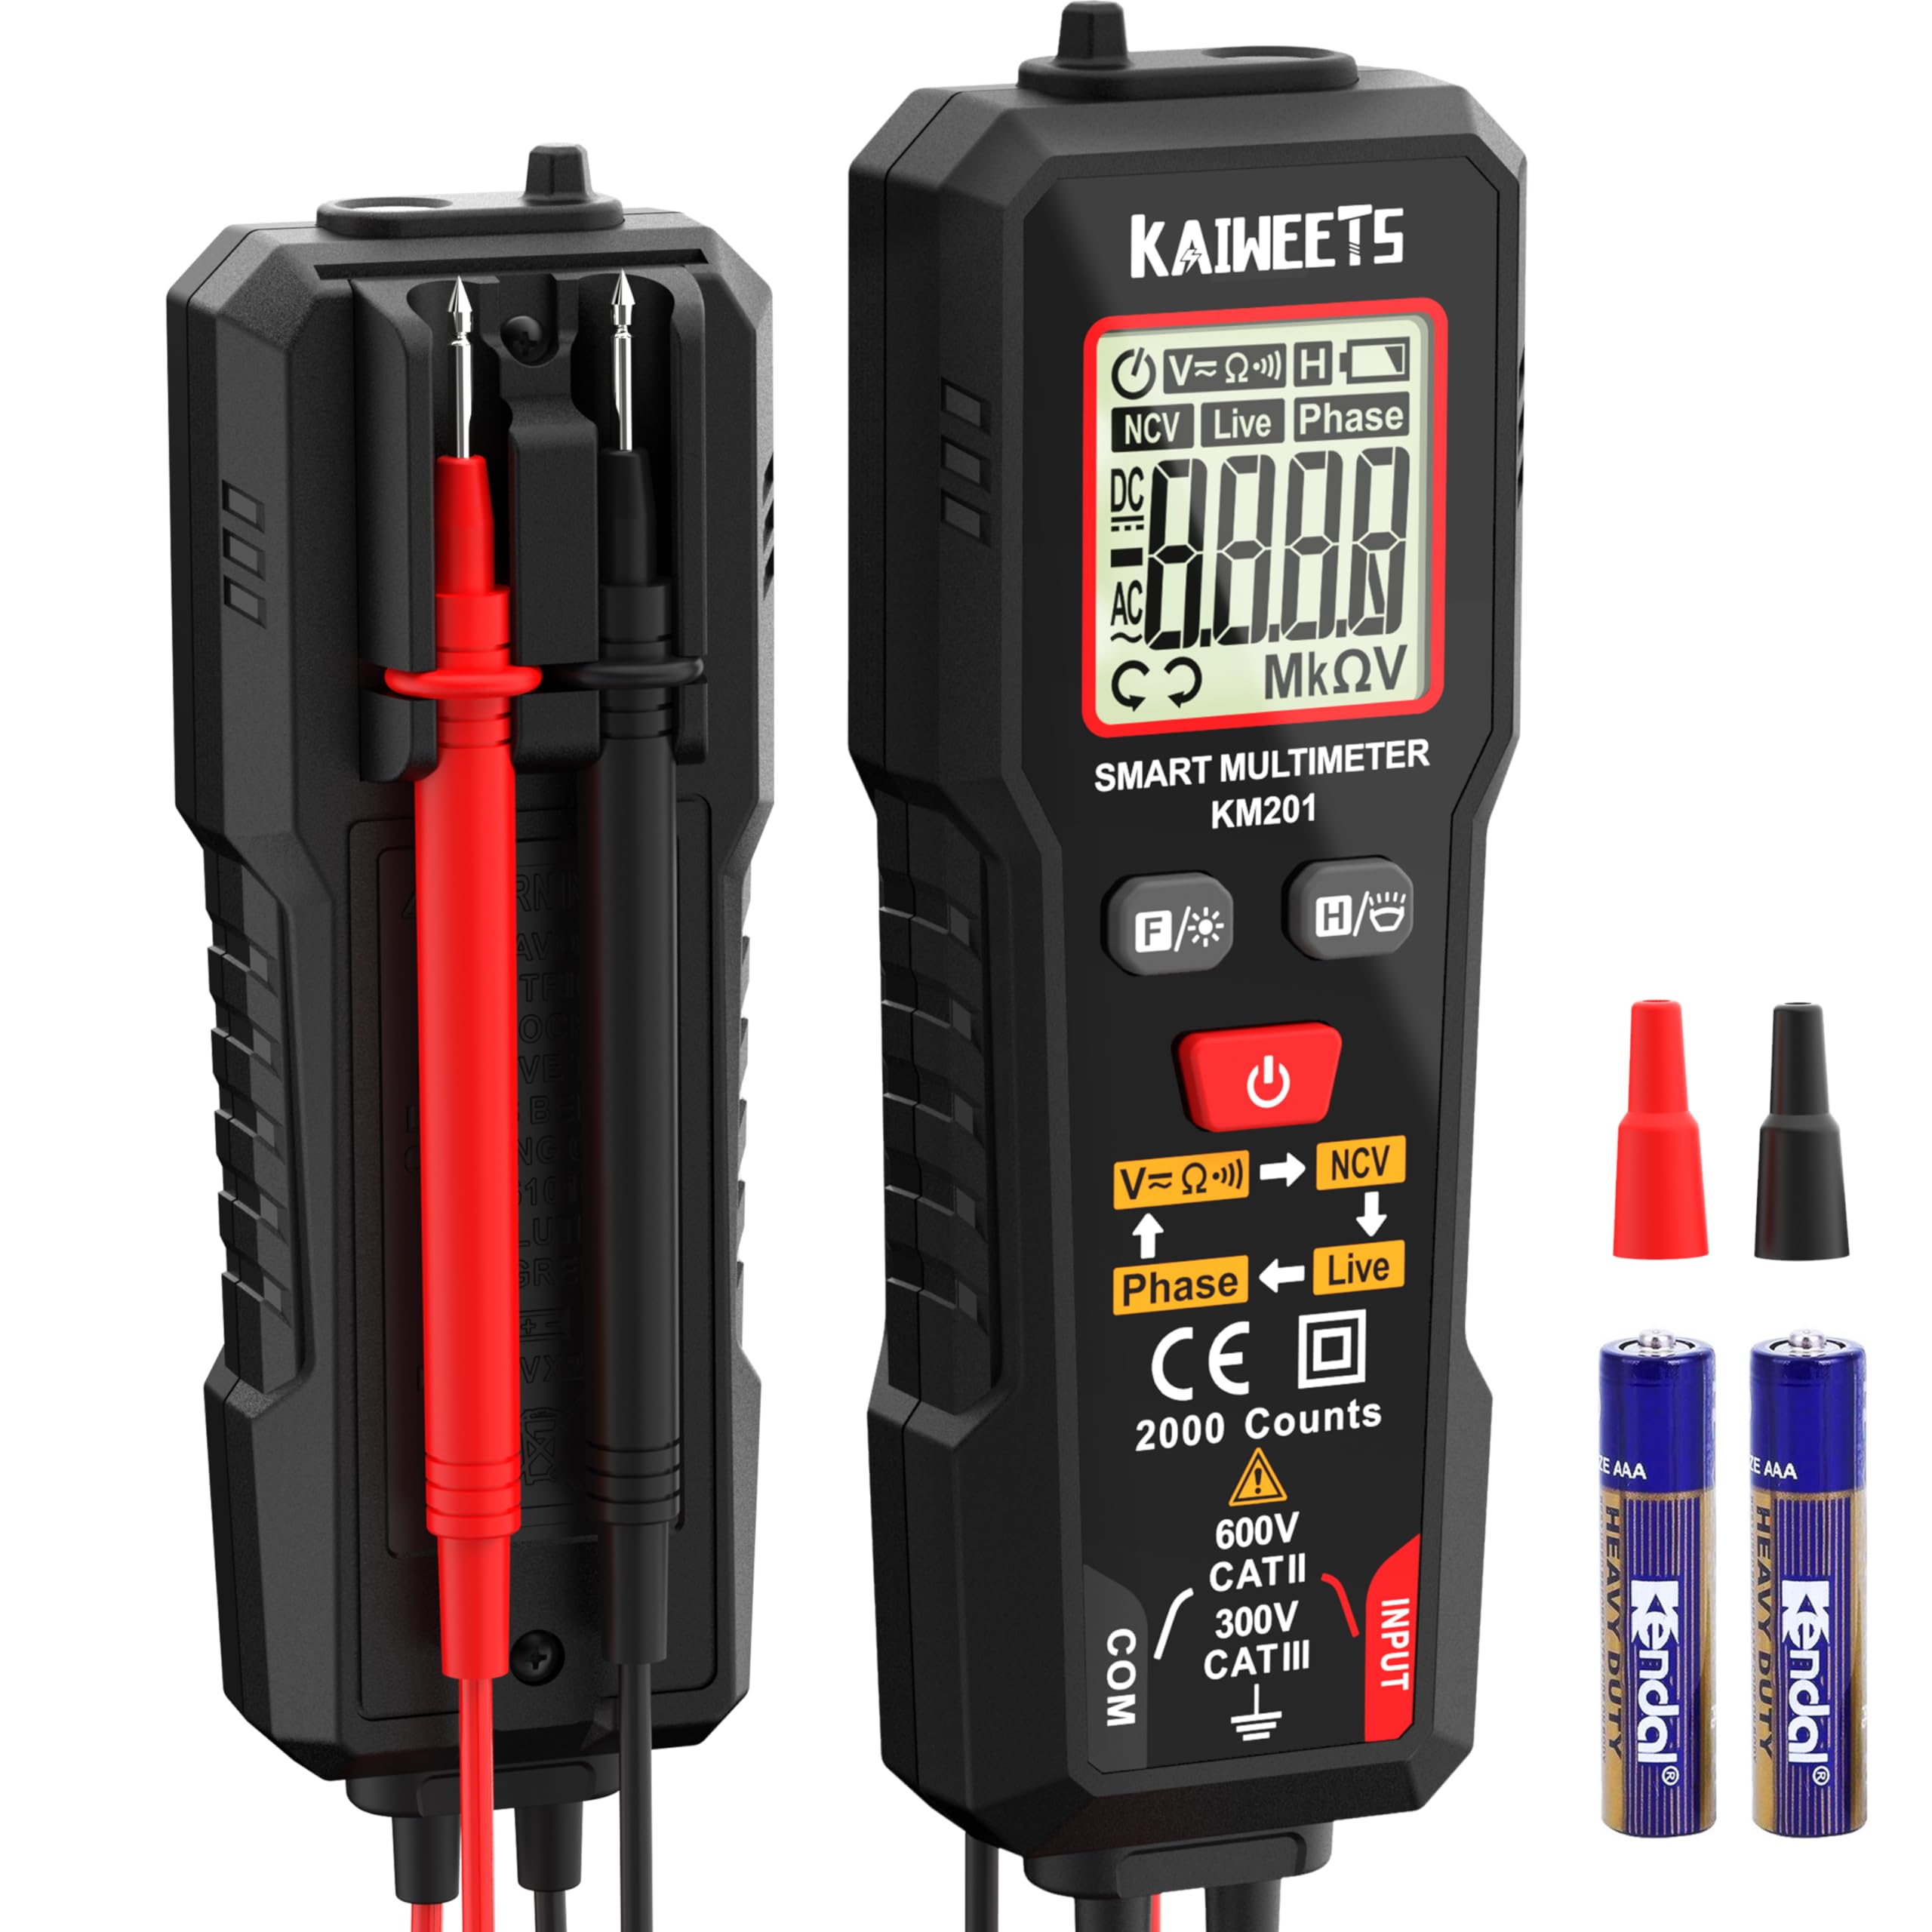 KAIWEETS スマートマルチメーター AC/DC電圧 位相シーケンス検出 導通 抵抗測定 NCV/活線チェック 2000カウント 小型デジタルテスター 日本語取扱説明書 KM201